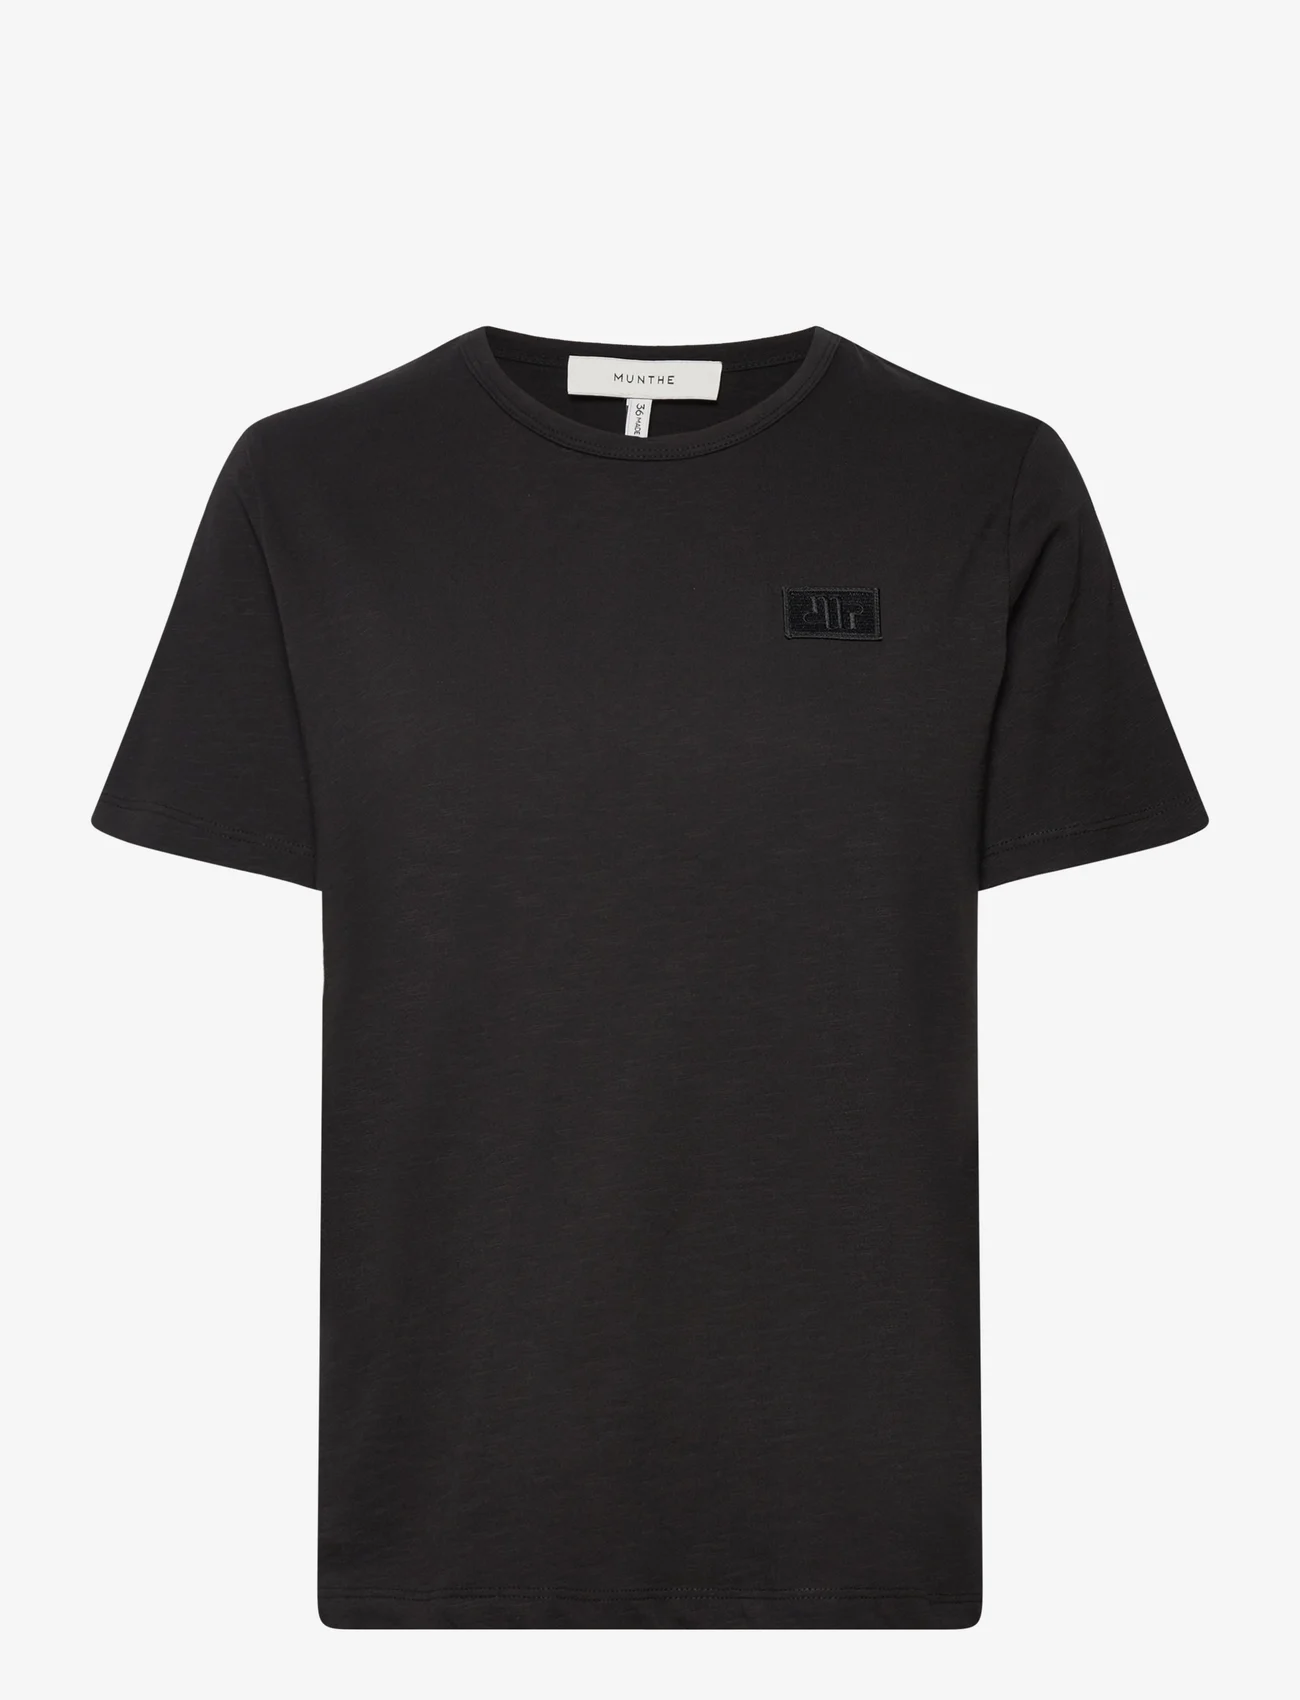 Munthe - AGO - t-shirts - black - 0